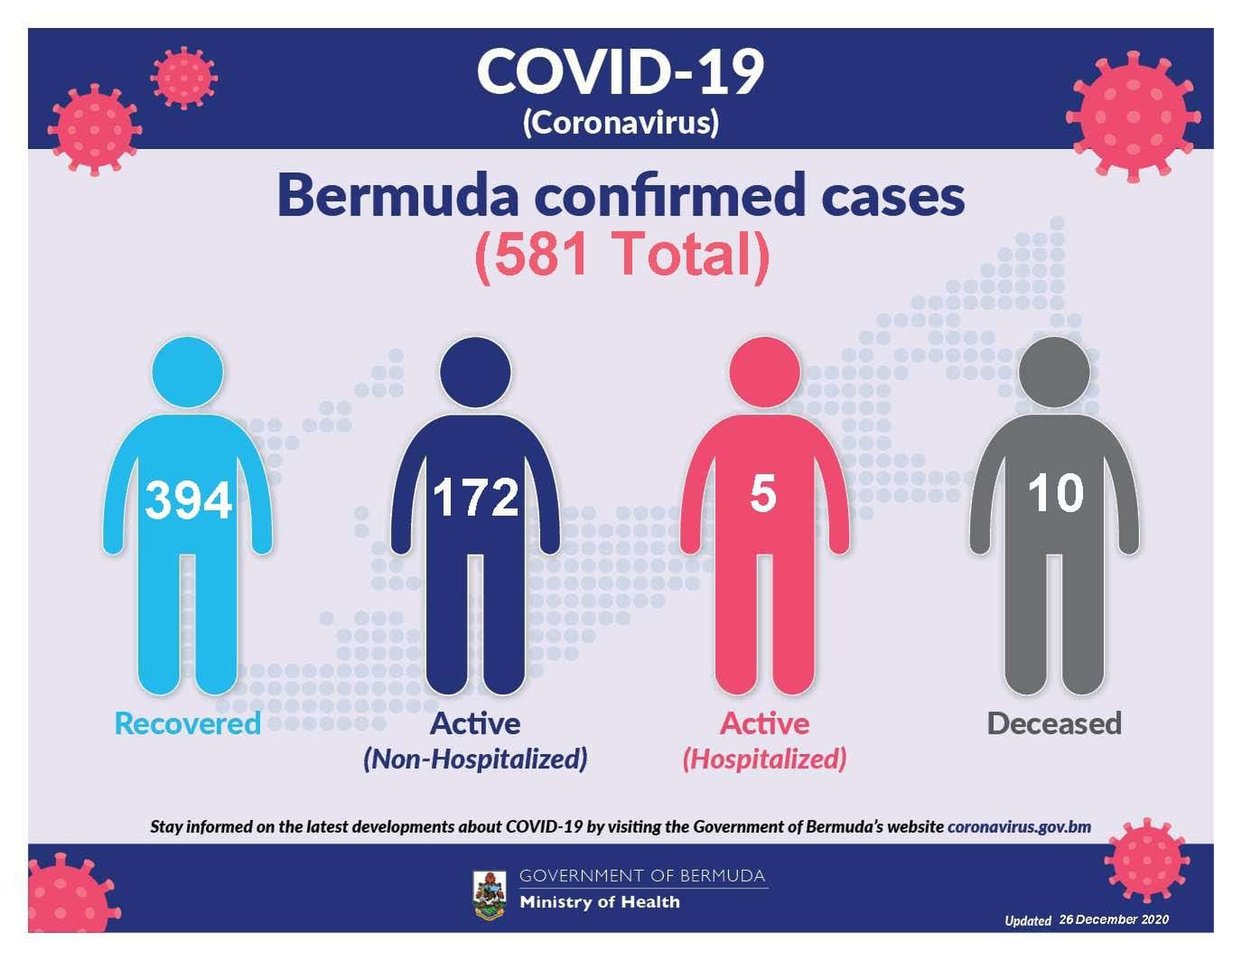 COVID-19 death toll increase to ten in Bermuda